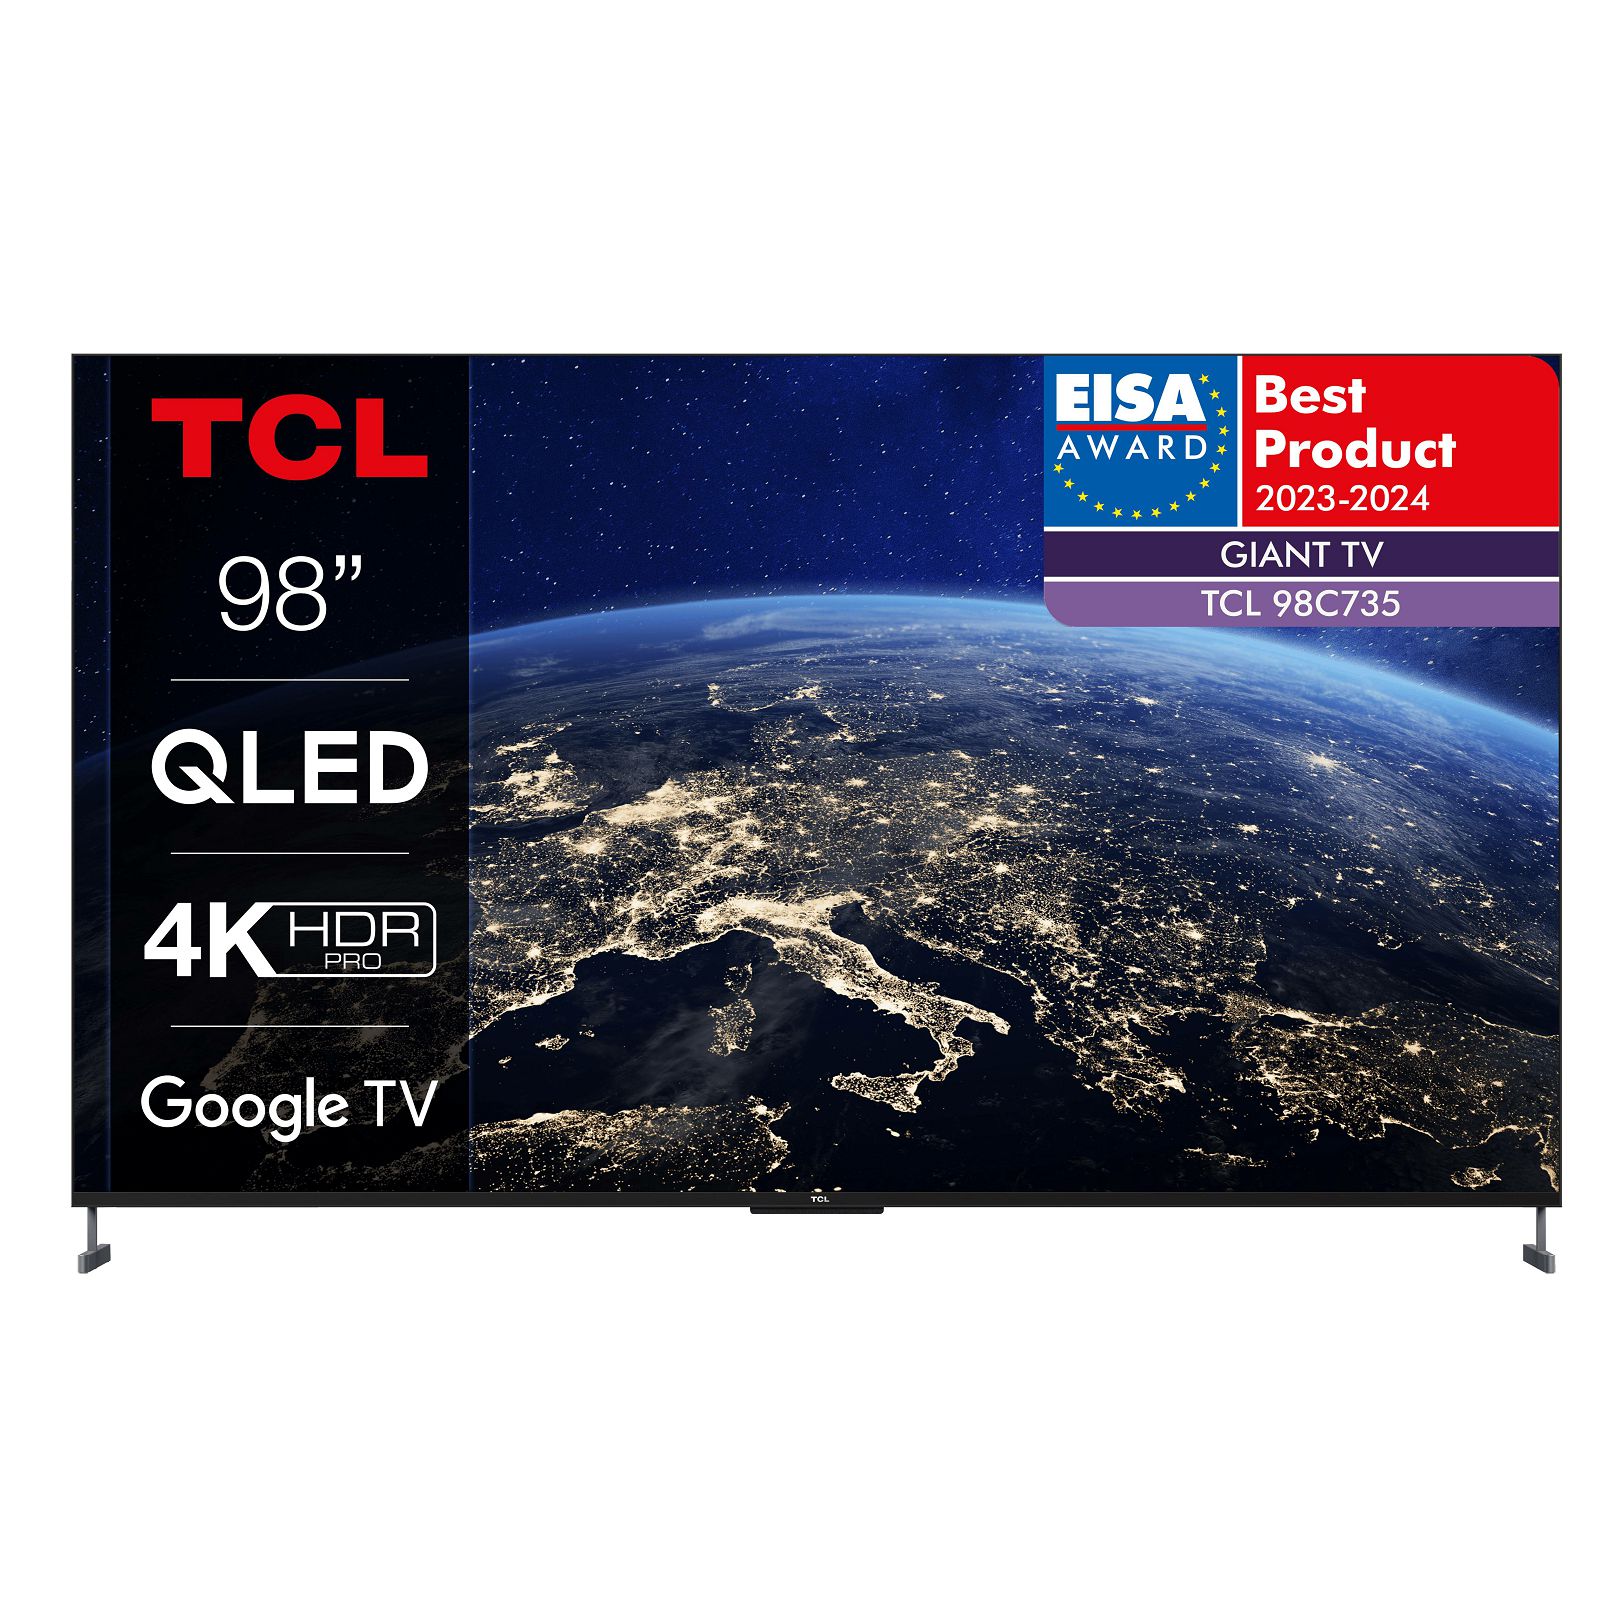 Televizor TCL 98'' 98C735, QLED, 4K, Google TV, DVB-T2/C/S2 HEVC/H.265